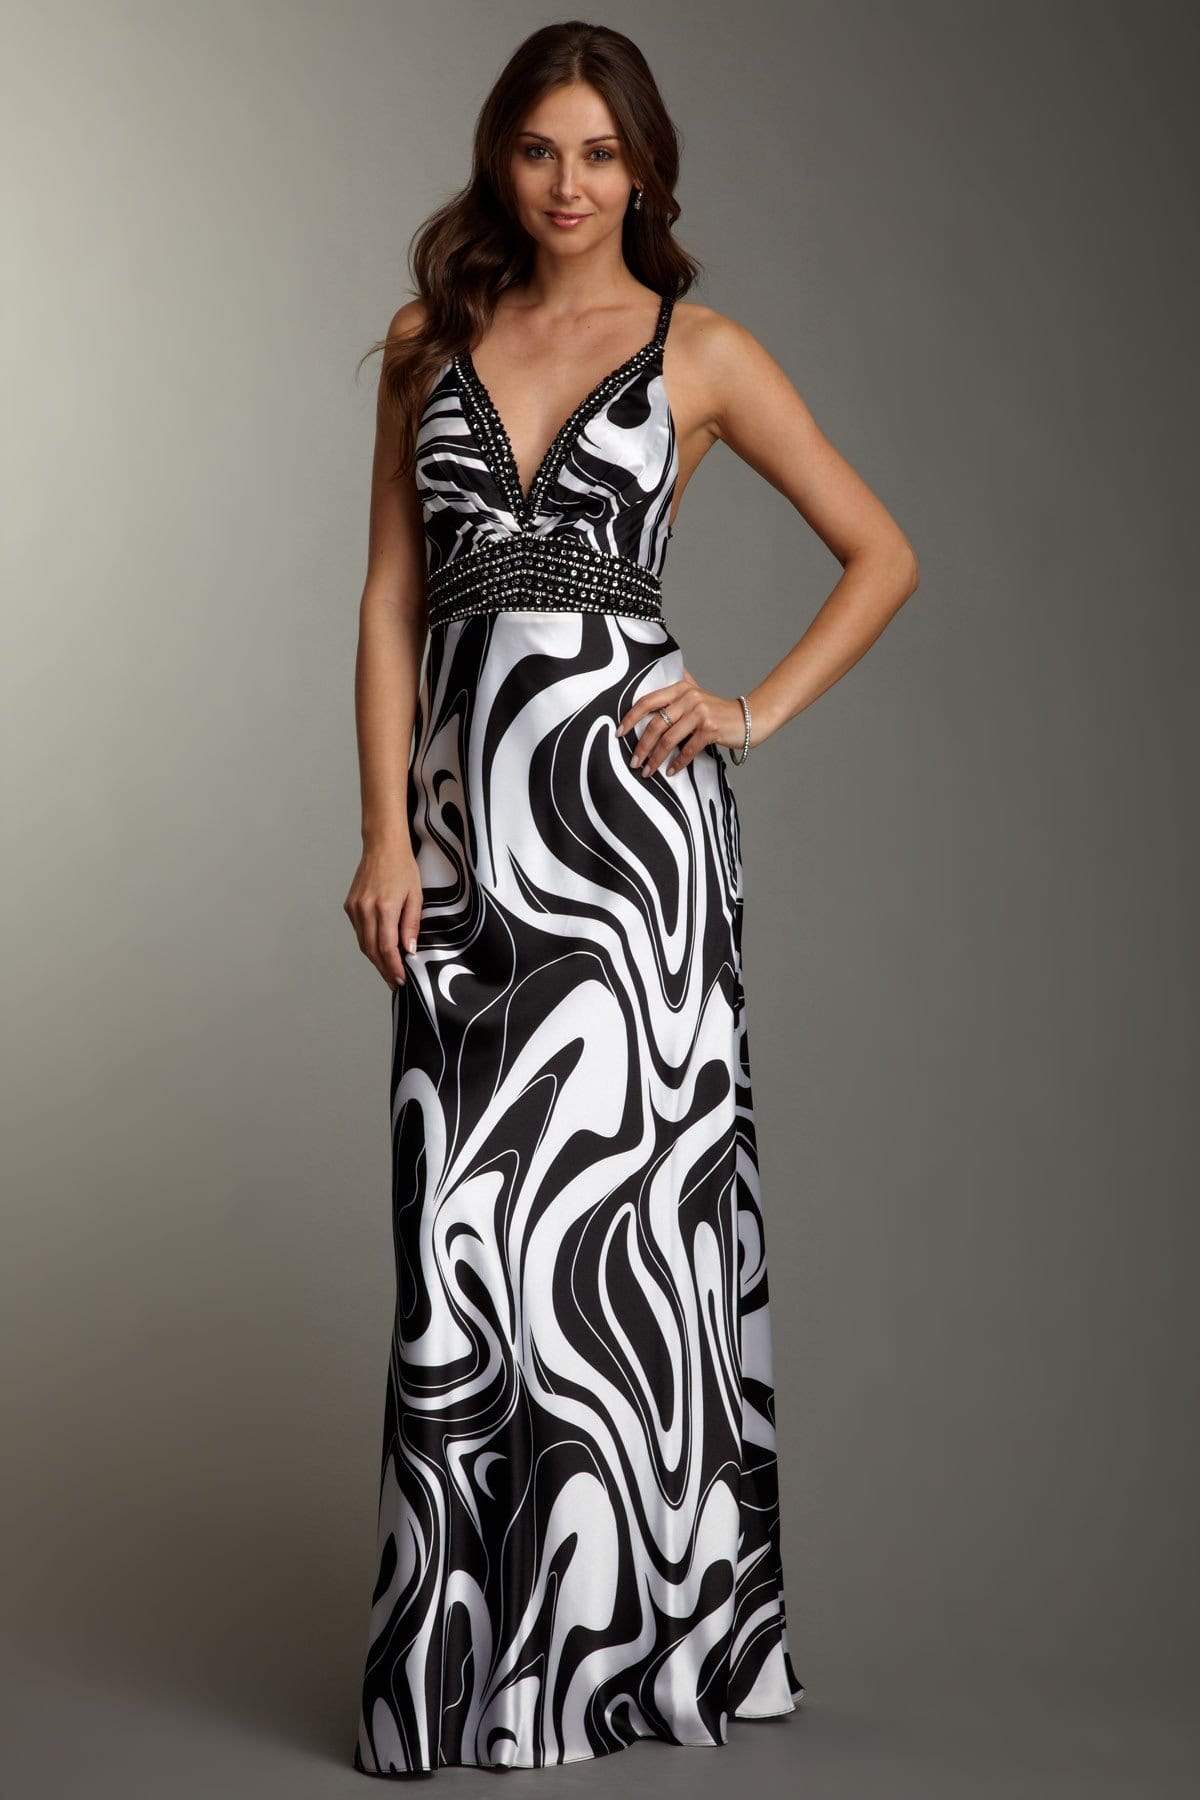 La Femme - 14186 Elegant Sleek Long Dress with Criss Cross Back Special Occasion Dress